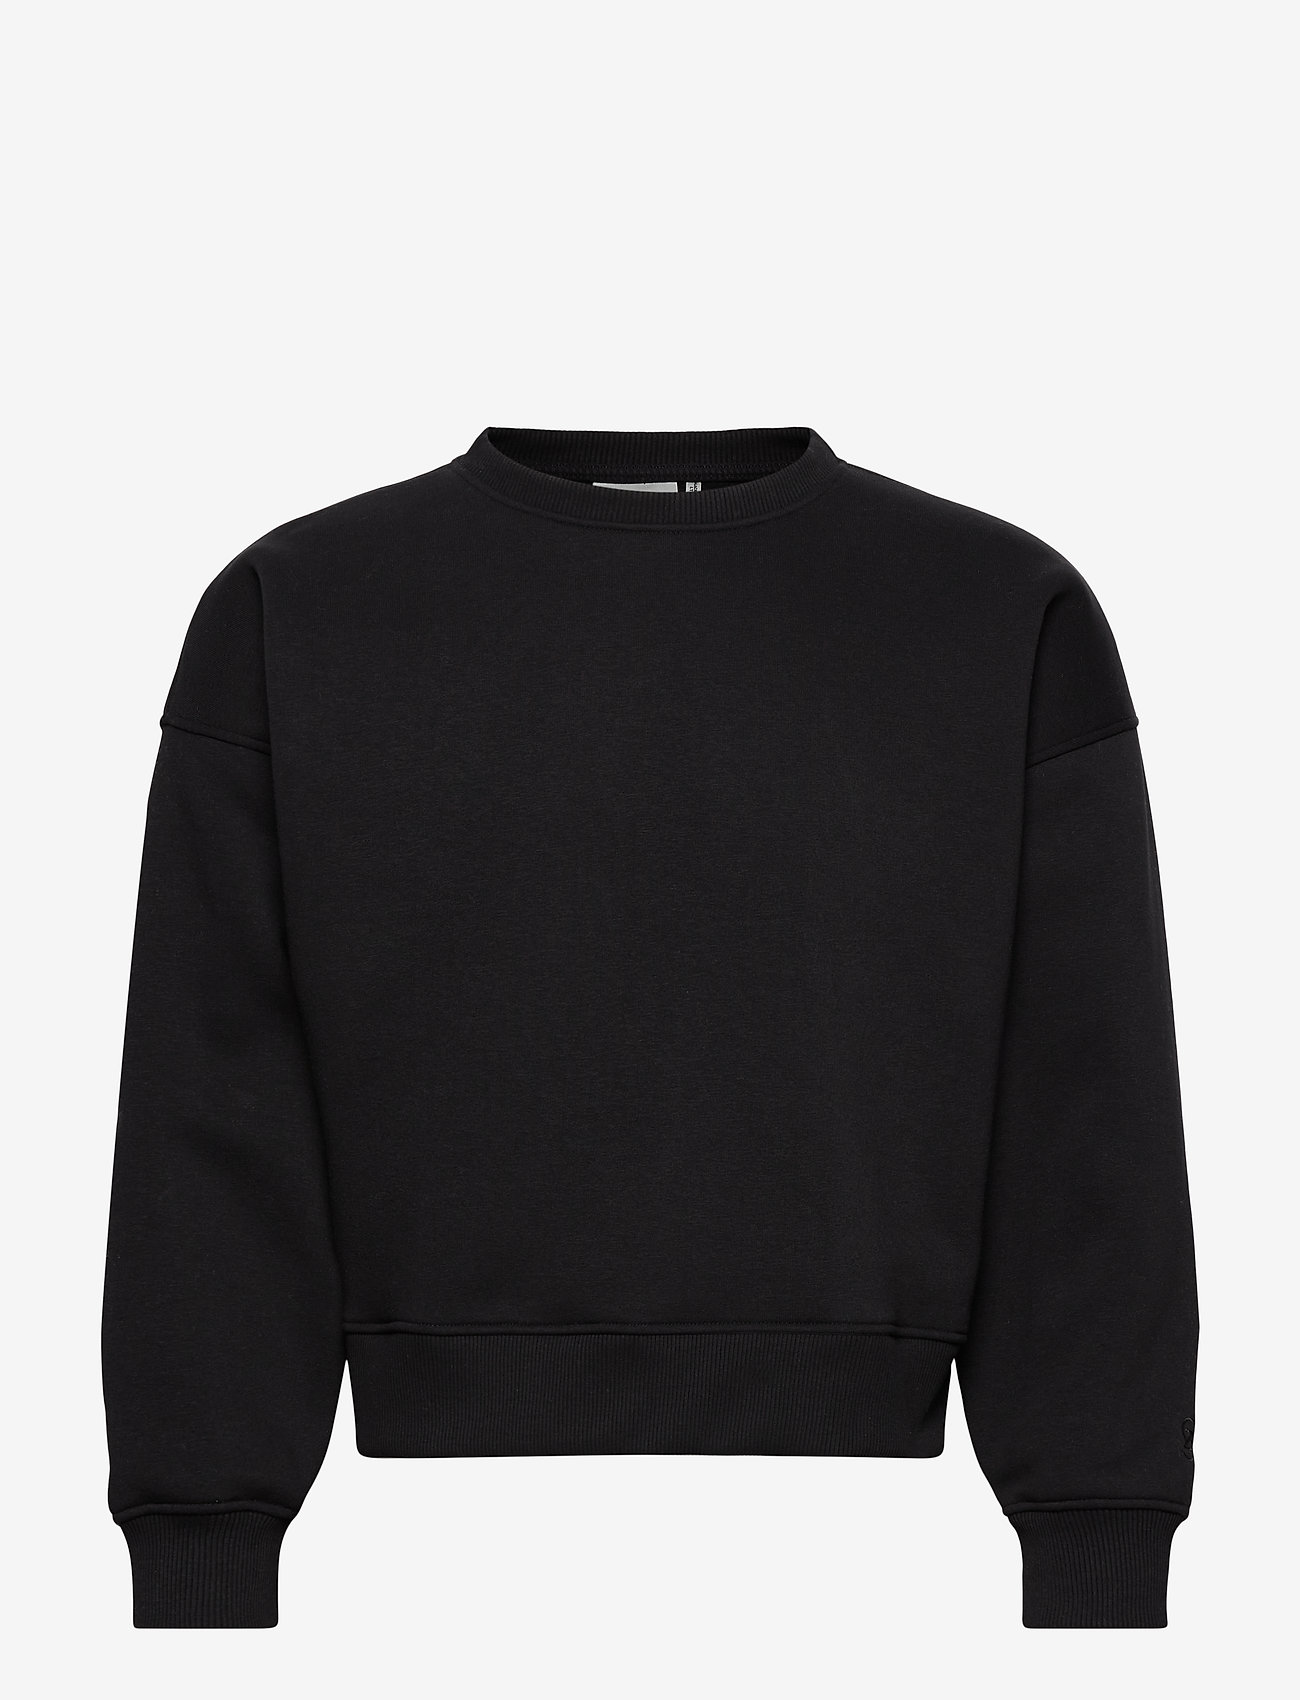 Gestuz - RubiGZ sweatshirt - black - 0